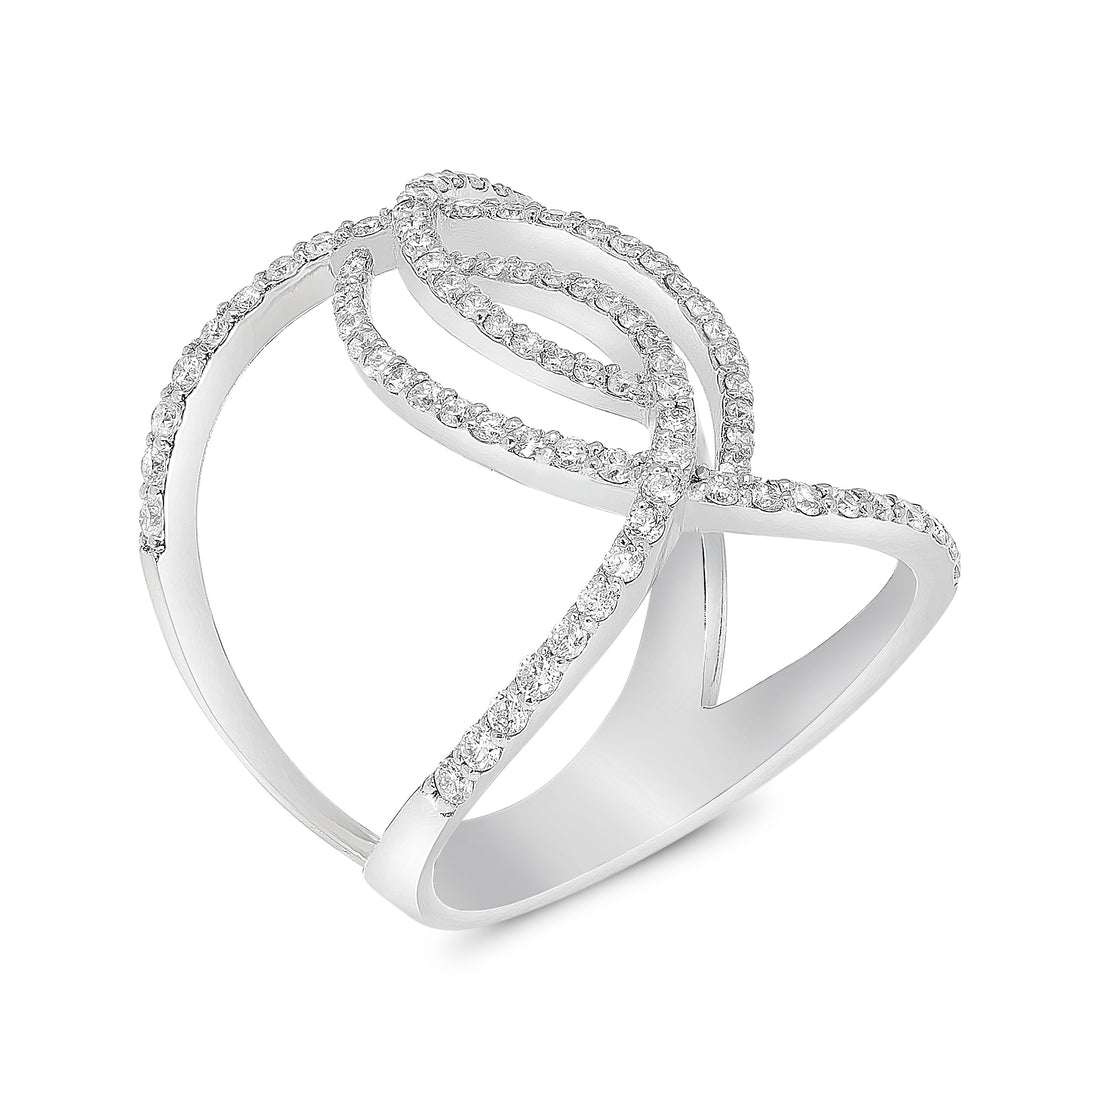 Tiara Criss Cross Diamond Band Ring